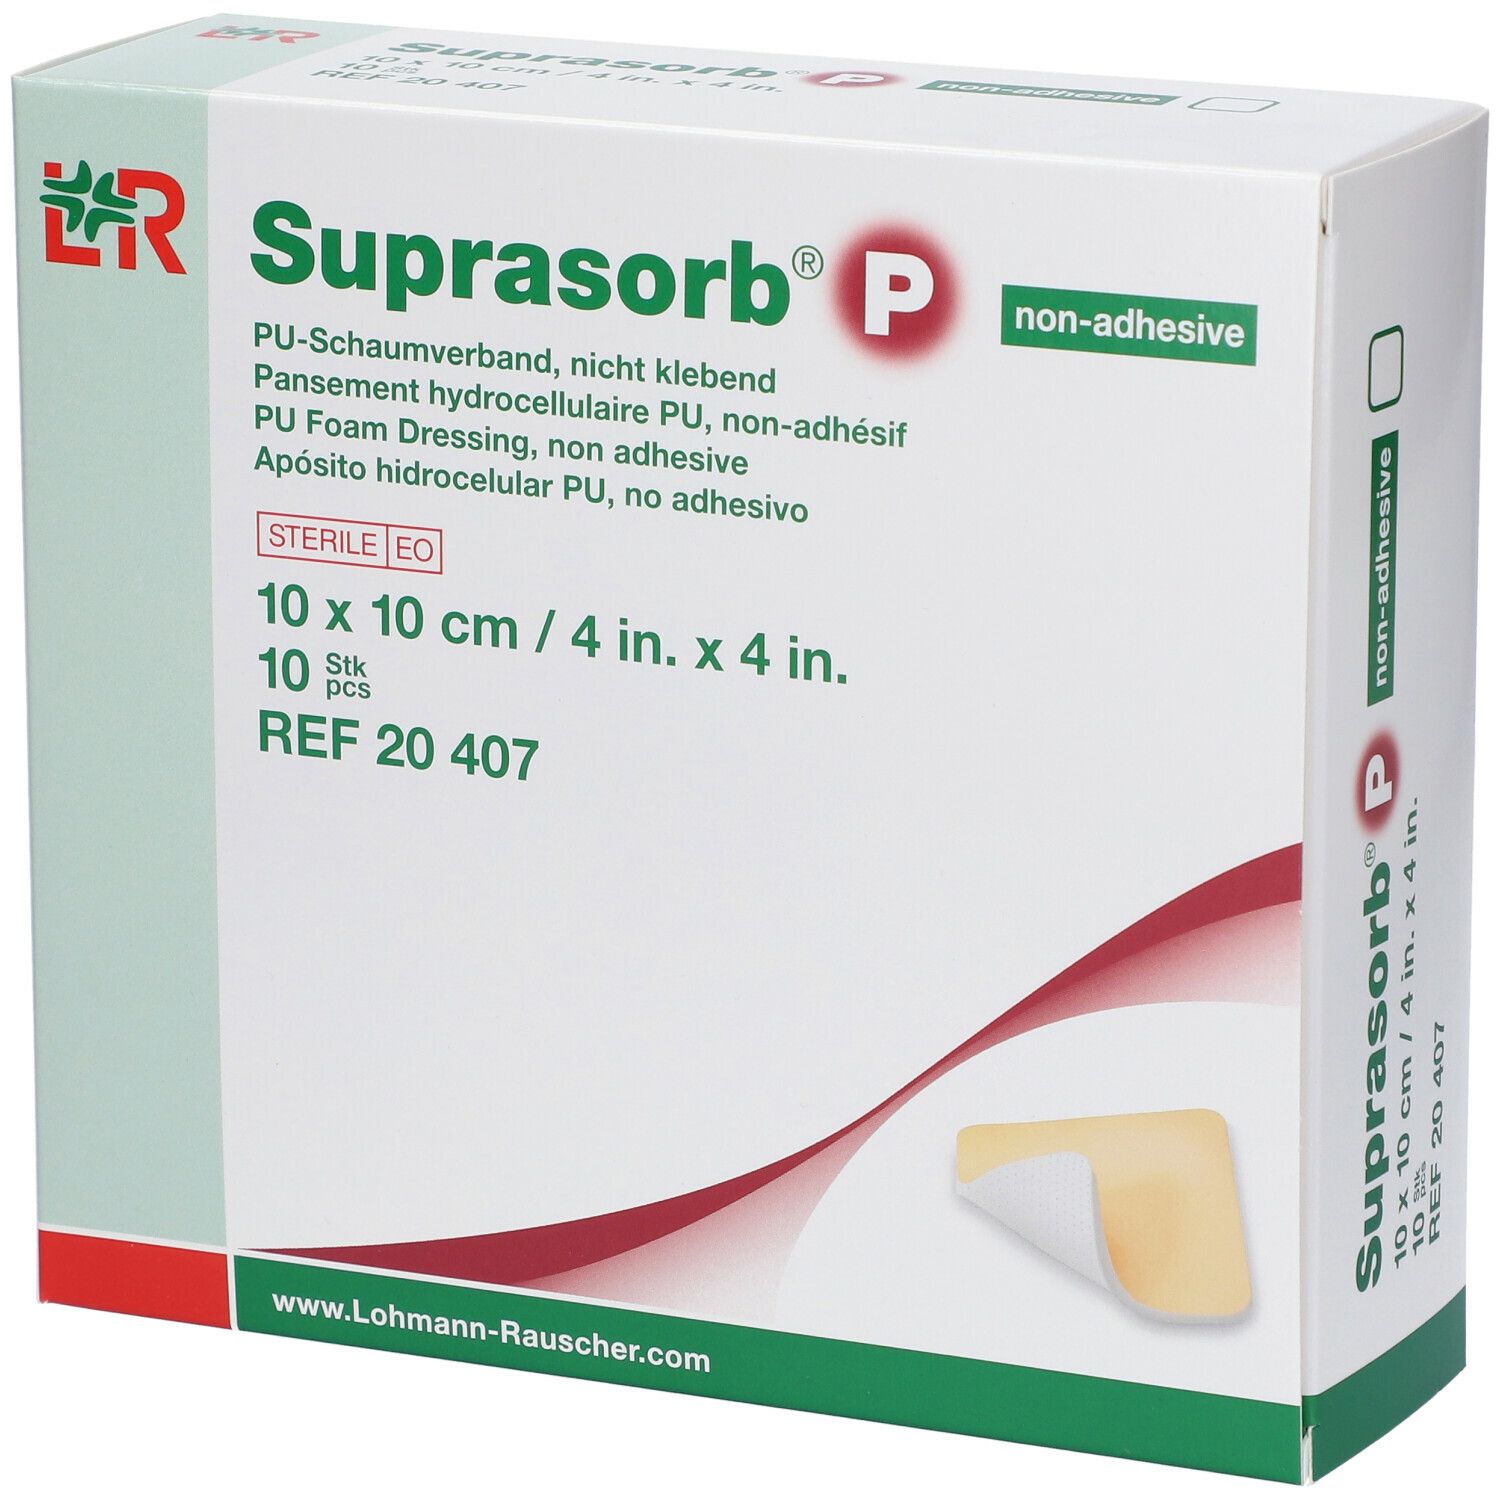 Suprasorb® P non-adhesive 10 x 10 cm